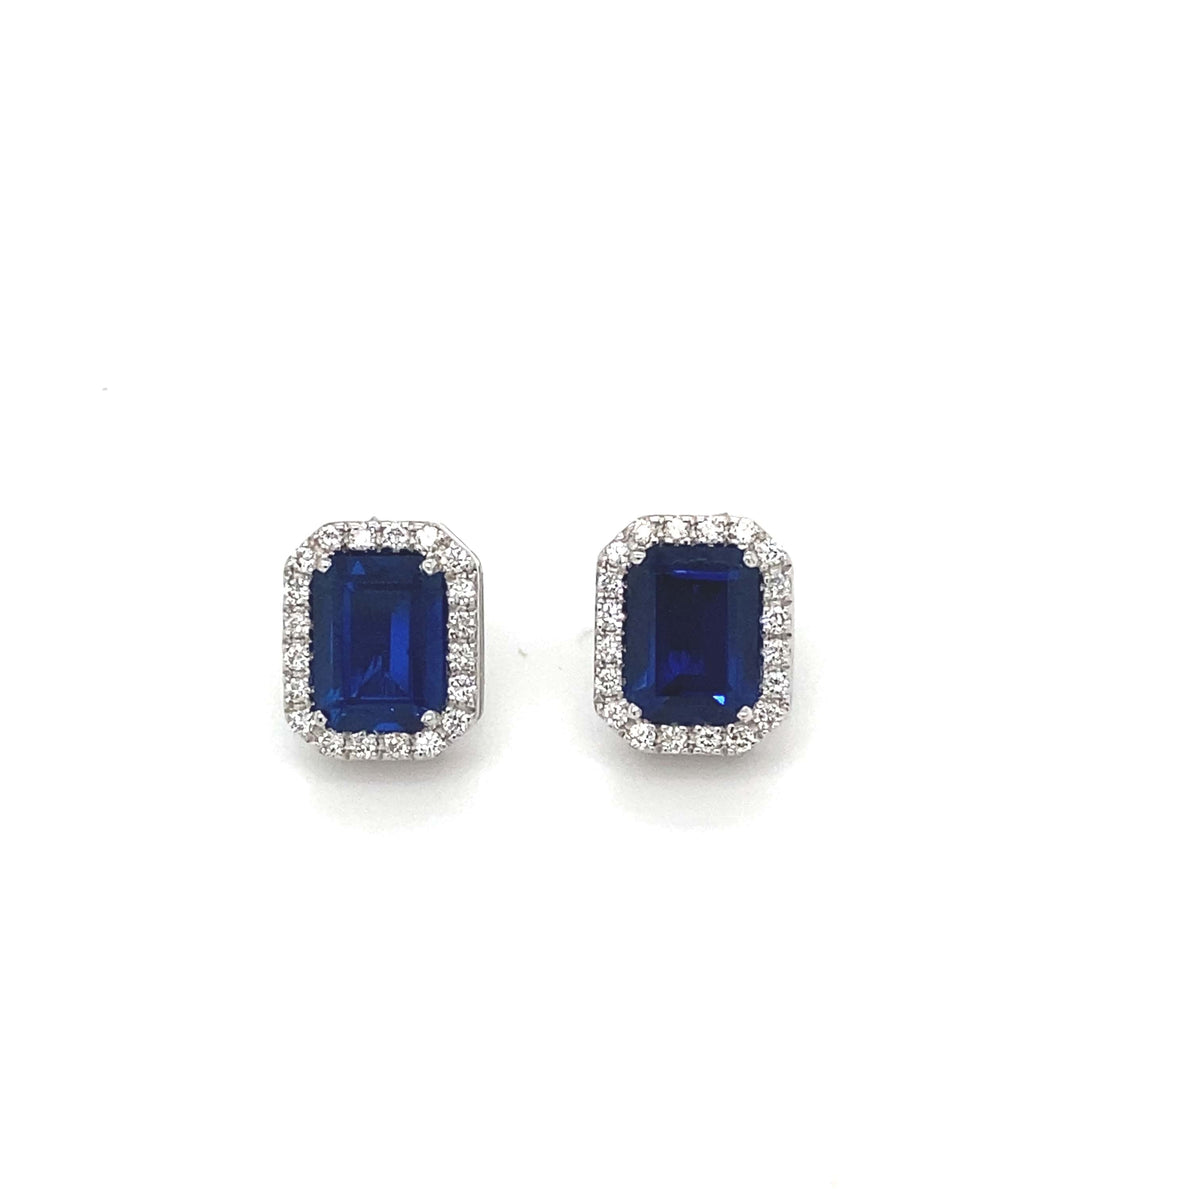 Blue Gemstone and Diamond Halo Earrings